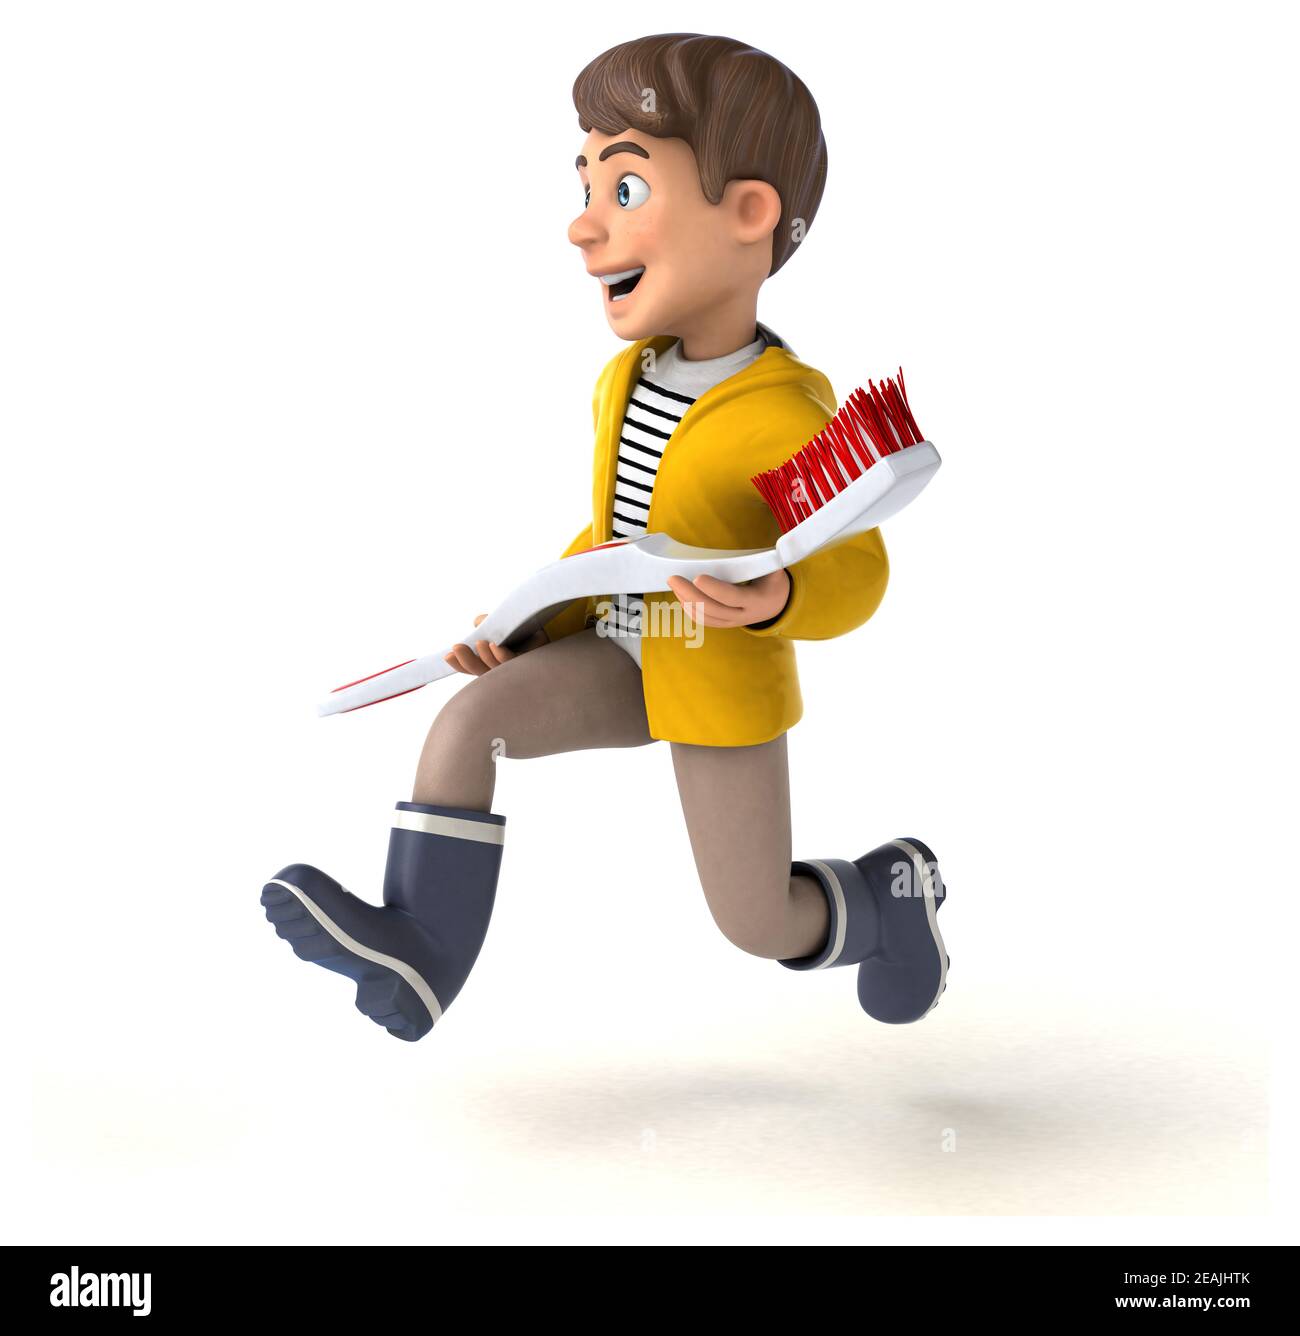 Fun 3D Illustration of a cartoon kid with rain gear Stock Photo - Alamy